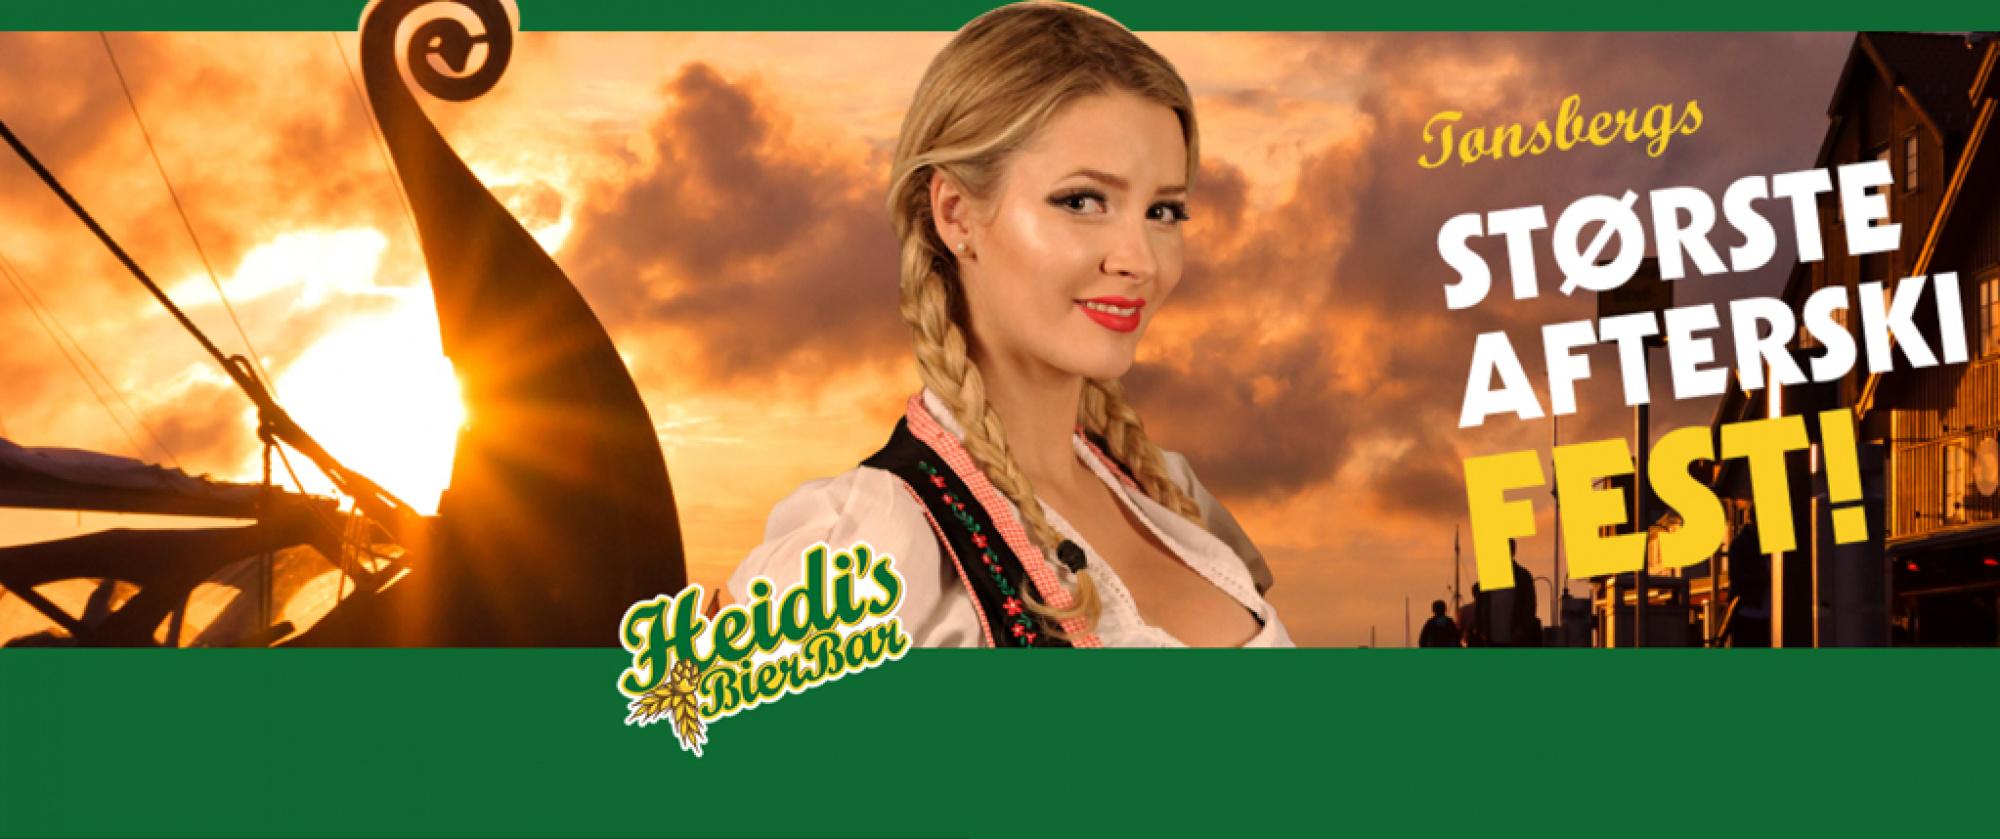 Heidi’s bier bar